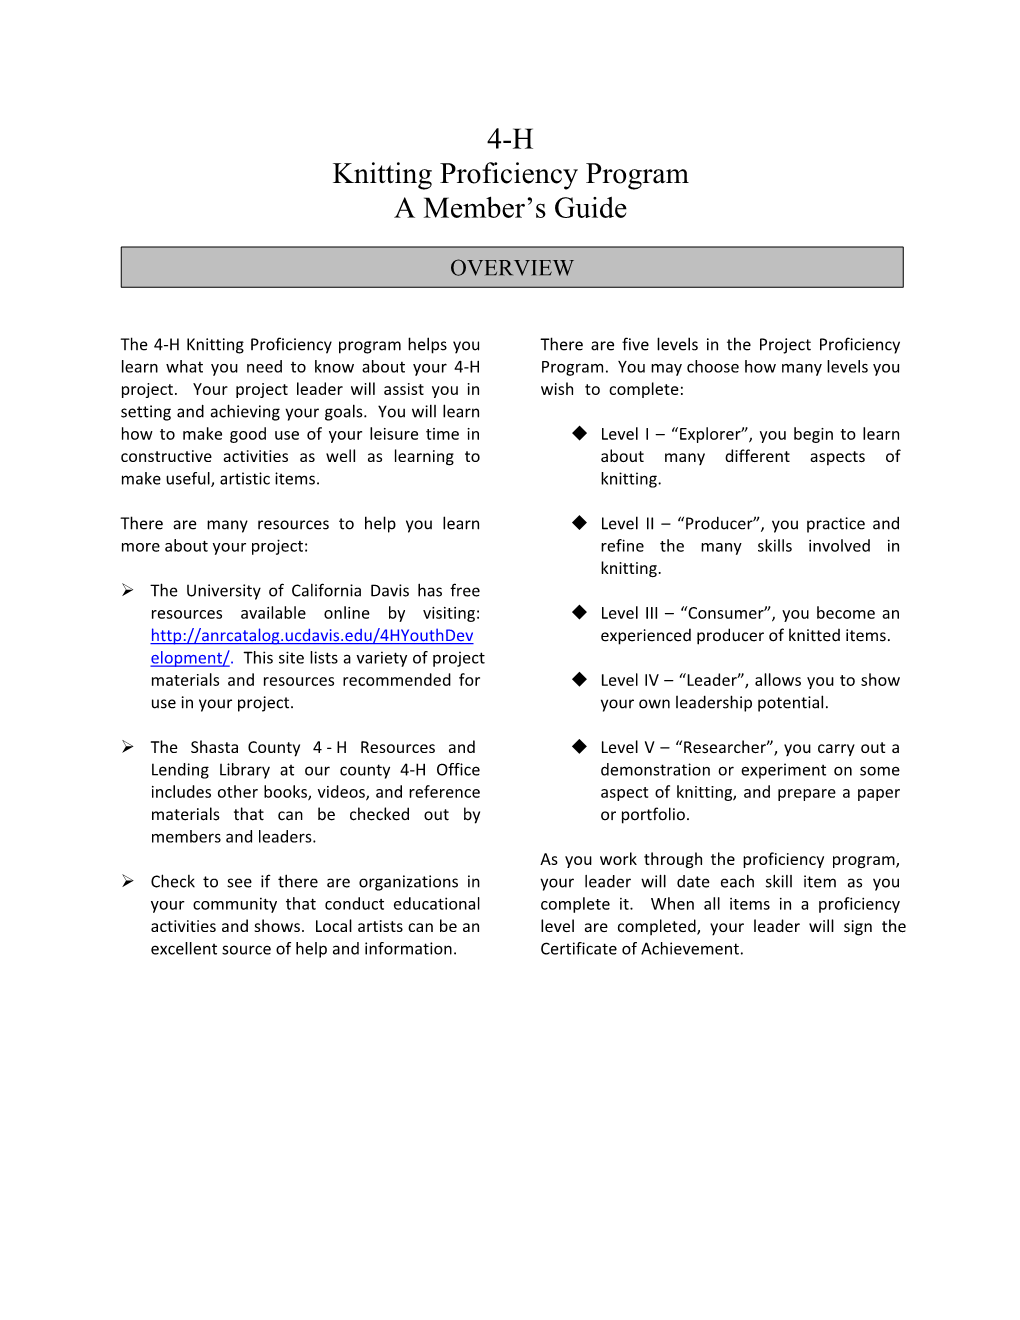 4-H Knitting Proficiency Program a Member's Guide